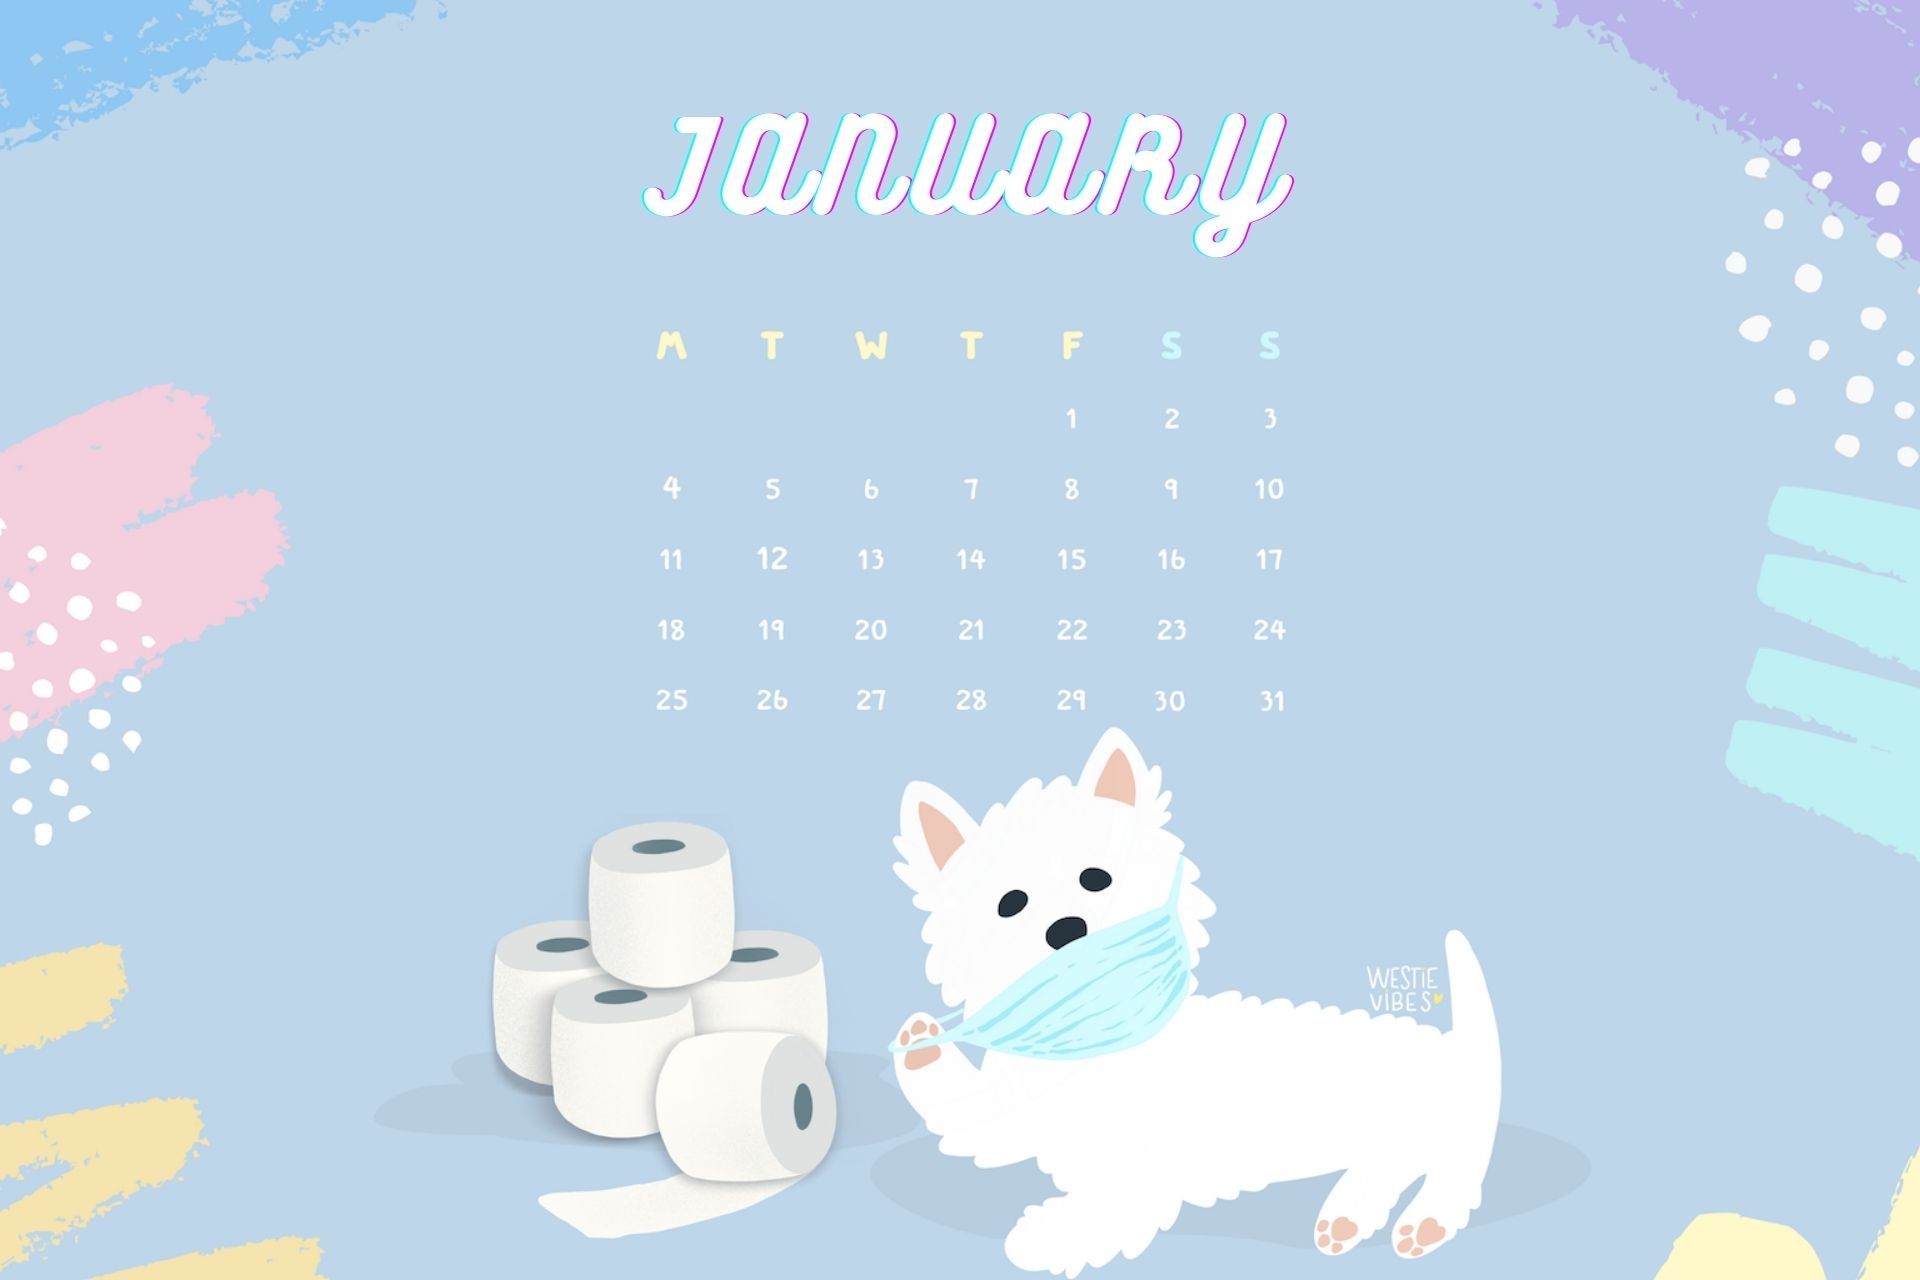 January 2021 Calendar Wallpapers Wallpaper Cave